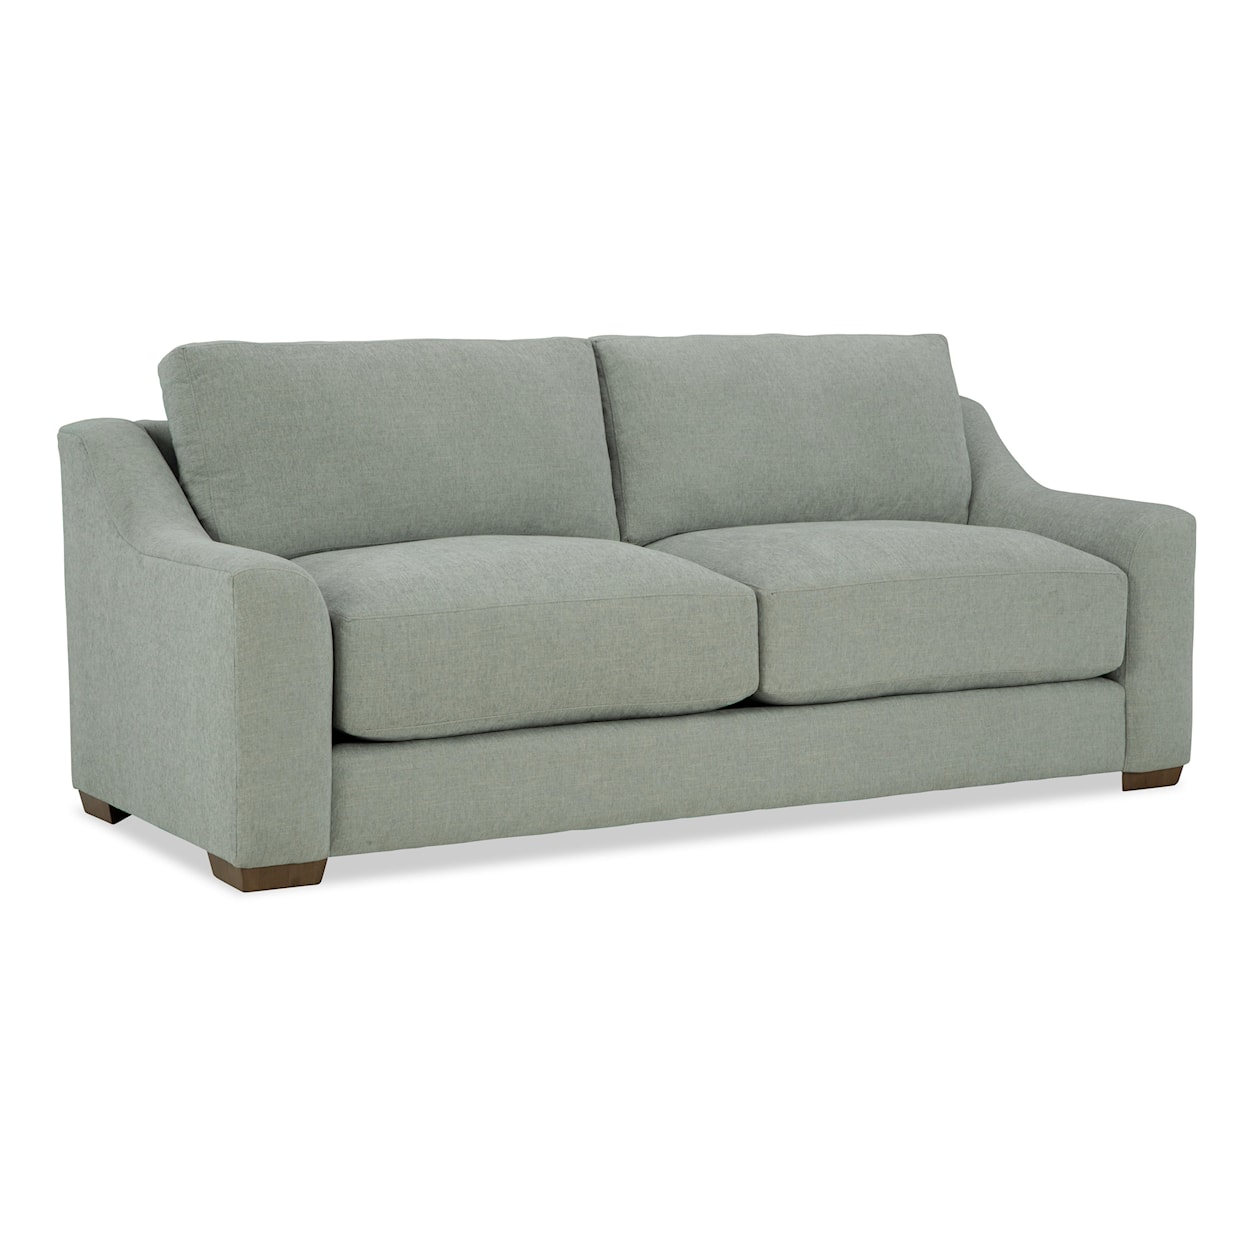 Craftmaster 735450BD Two Cushion Sofa